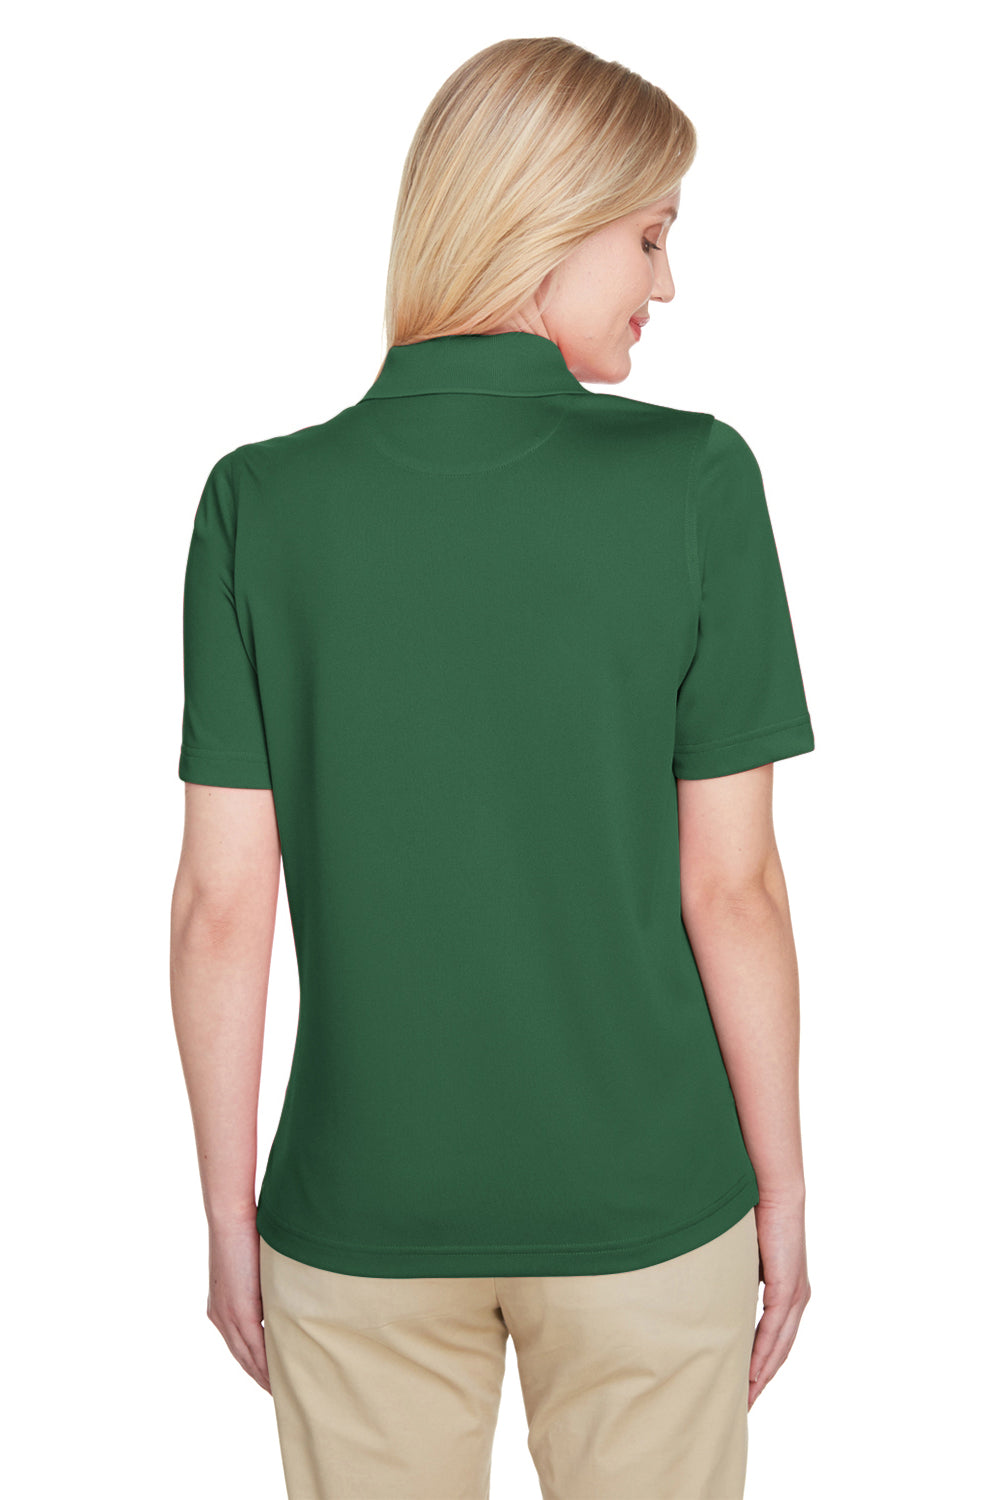 Harriton M348W Womens Advantage Performance Moisture Wicking Short Sleeve Polo Shirt Dark Green Back